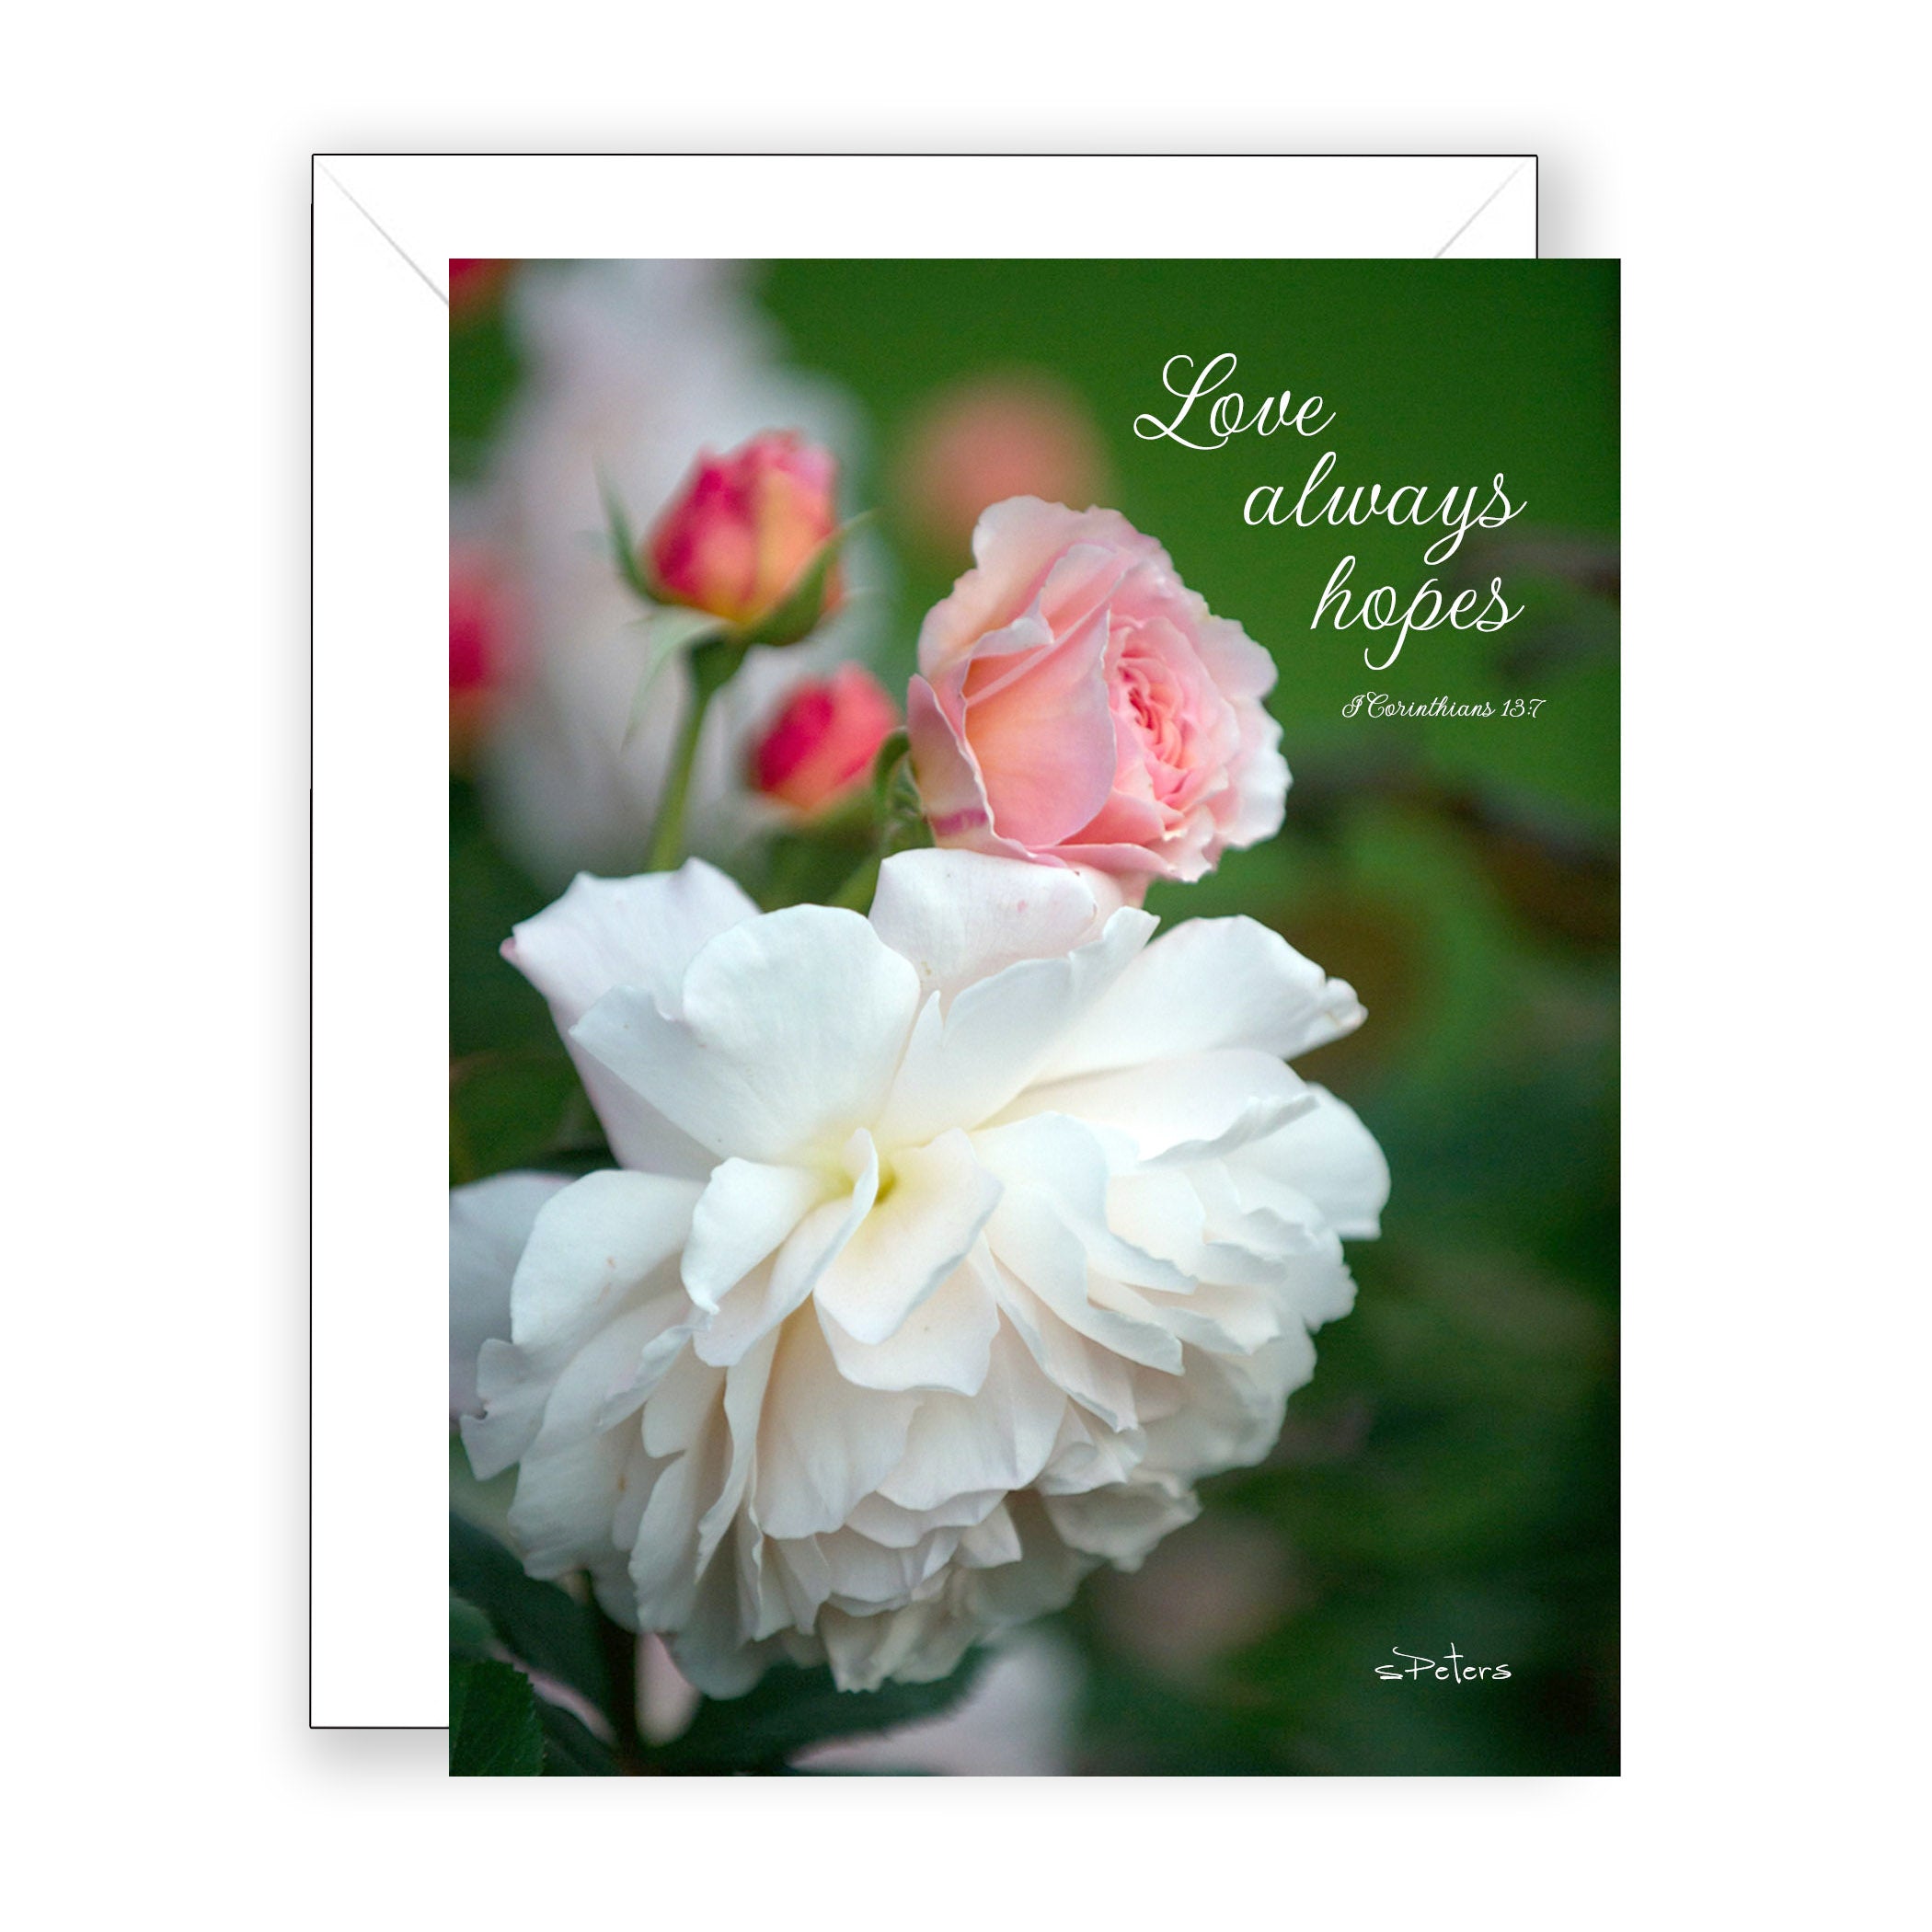 Love Always Hopes (I Corinthians 13:7) - Encouragement Card (Blank)